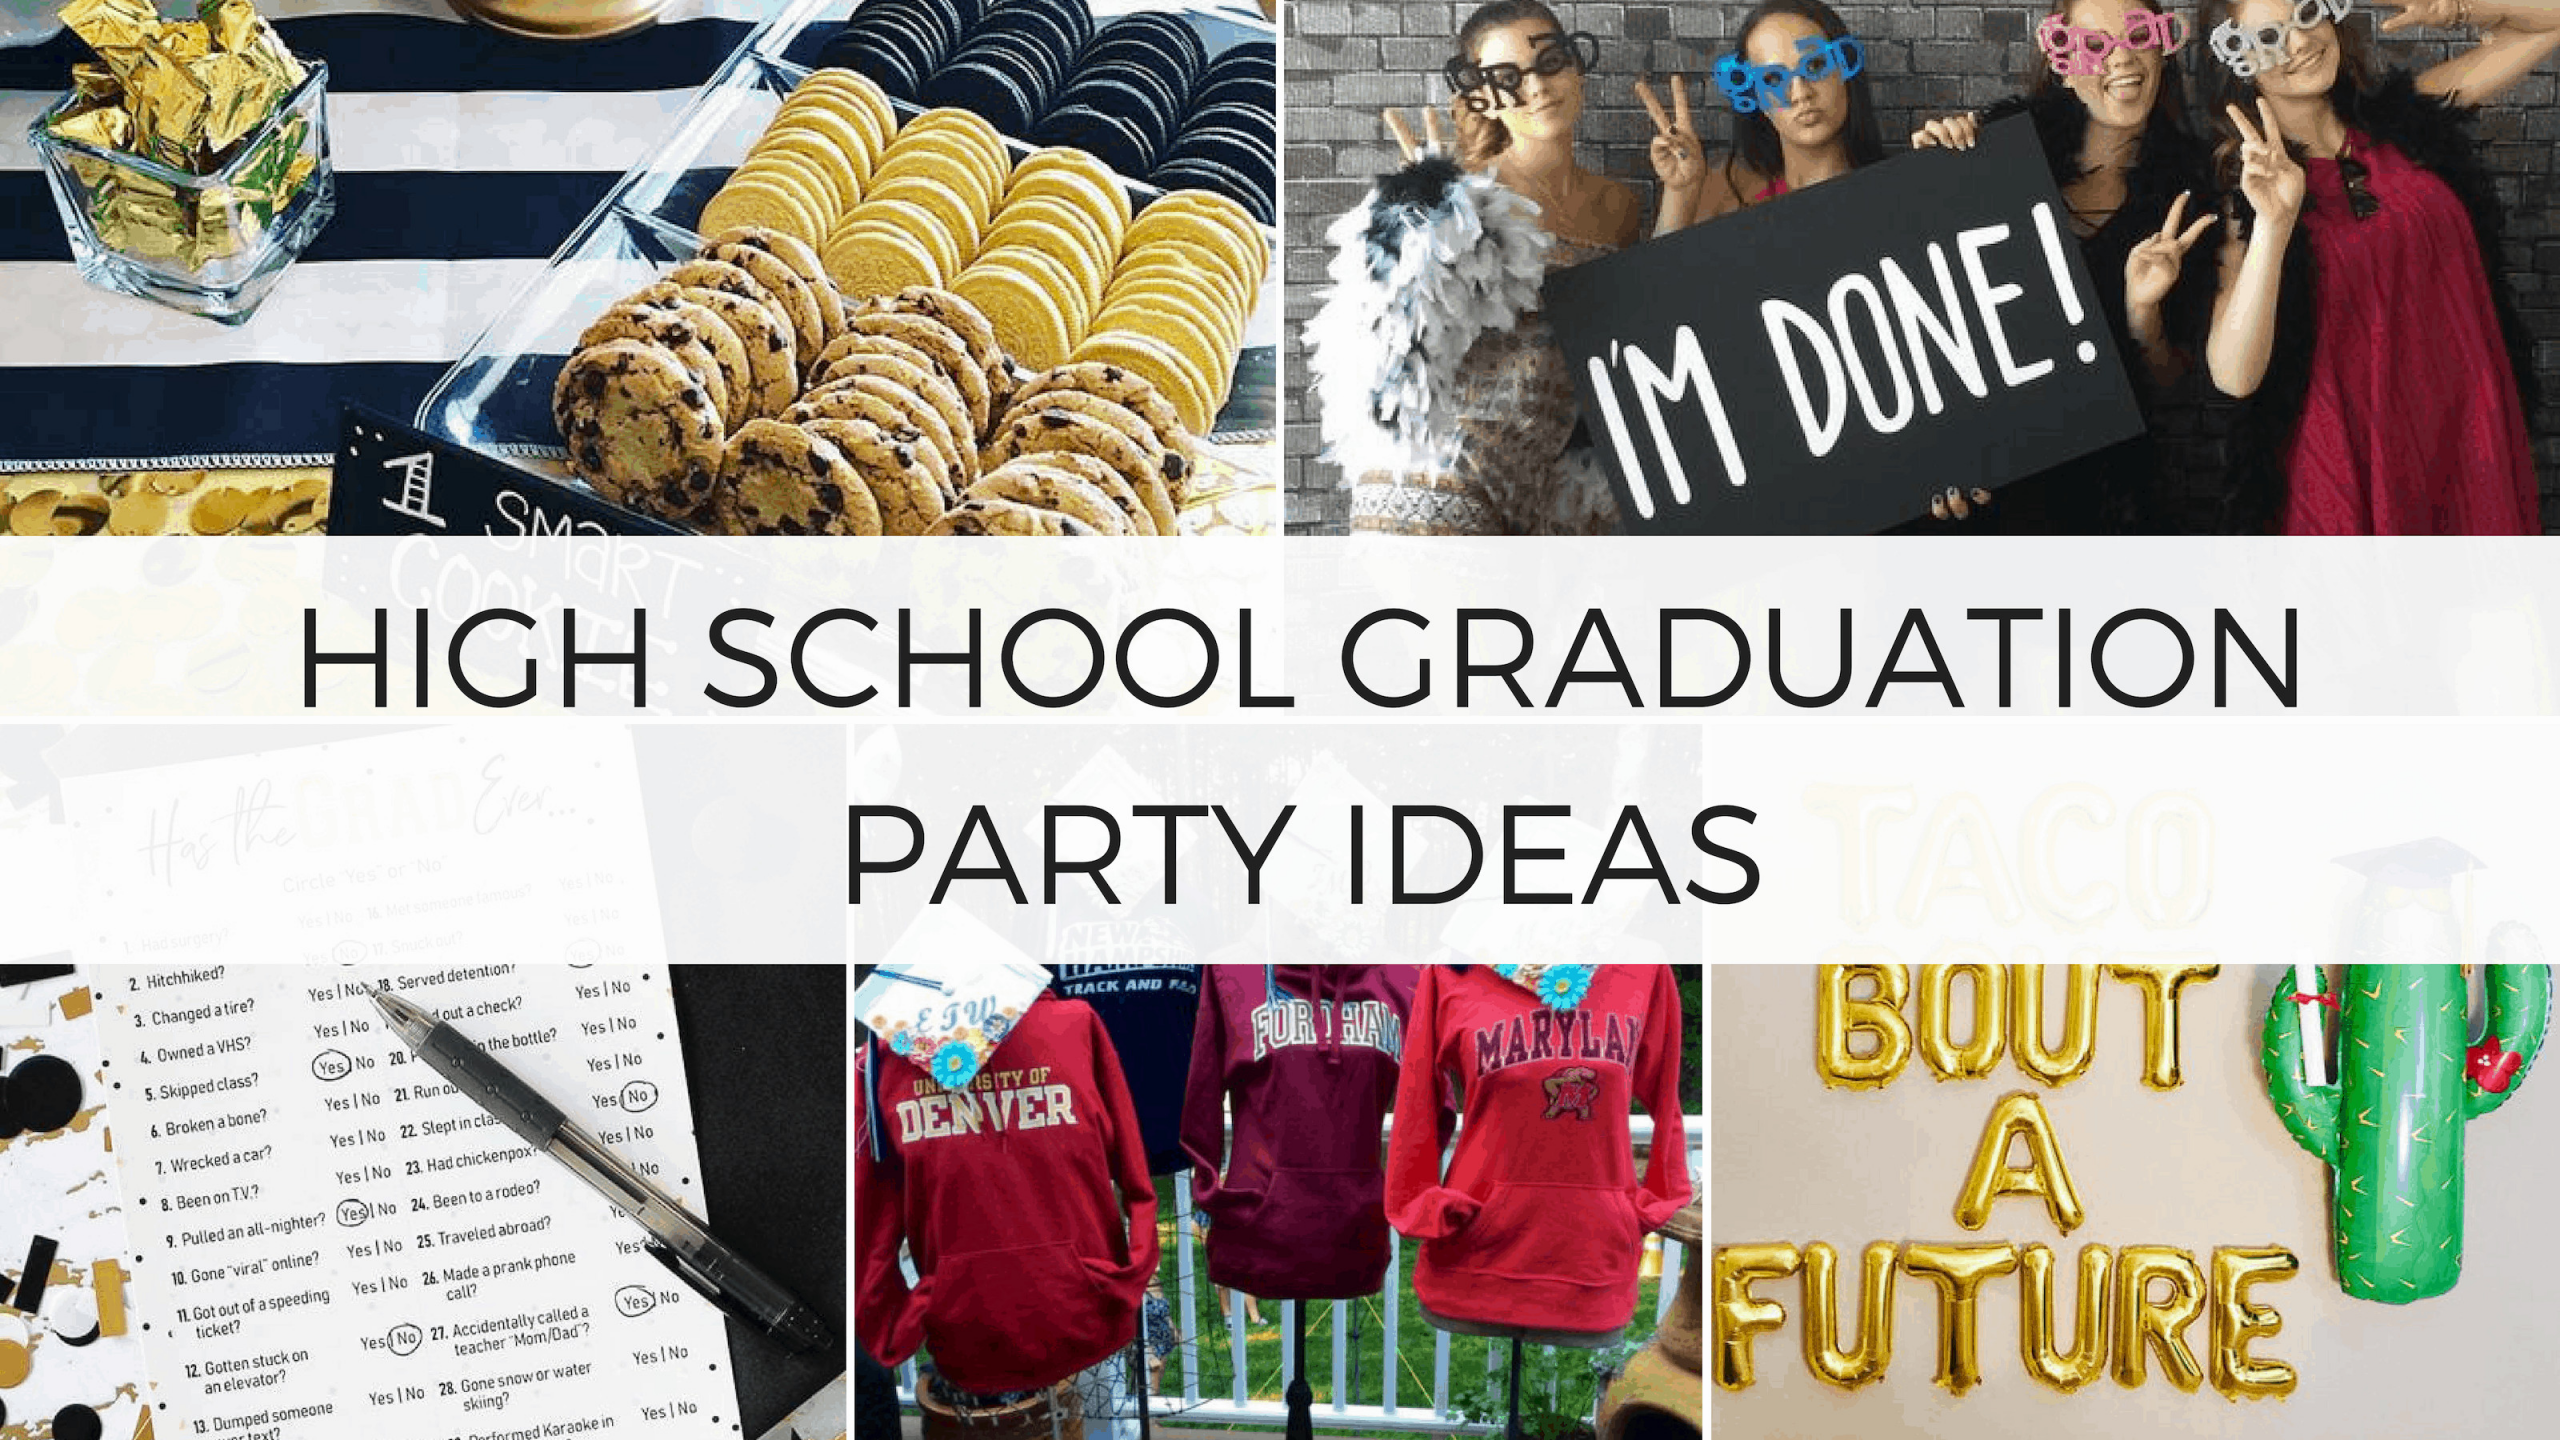 High School Graduation Ideas Party
 26 Insanely Creative High School Graduation Party Ideas